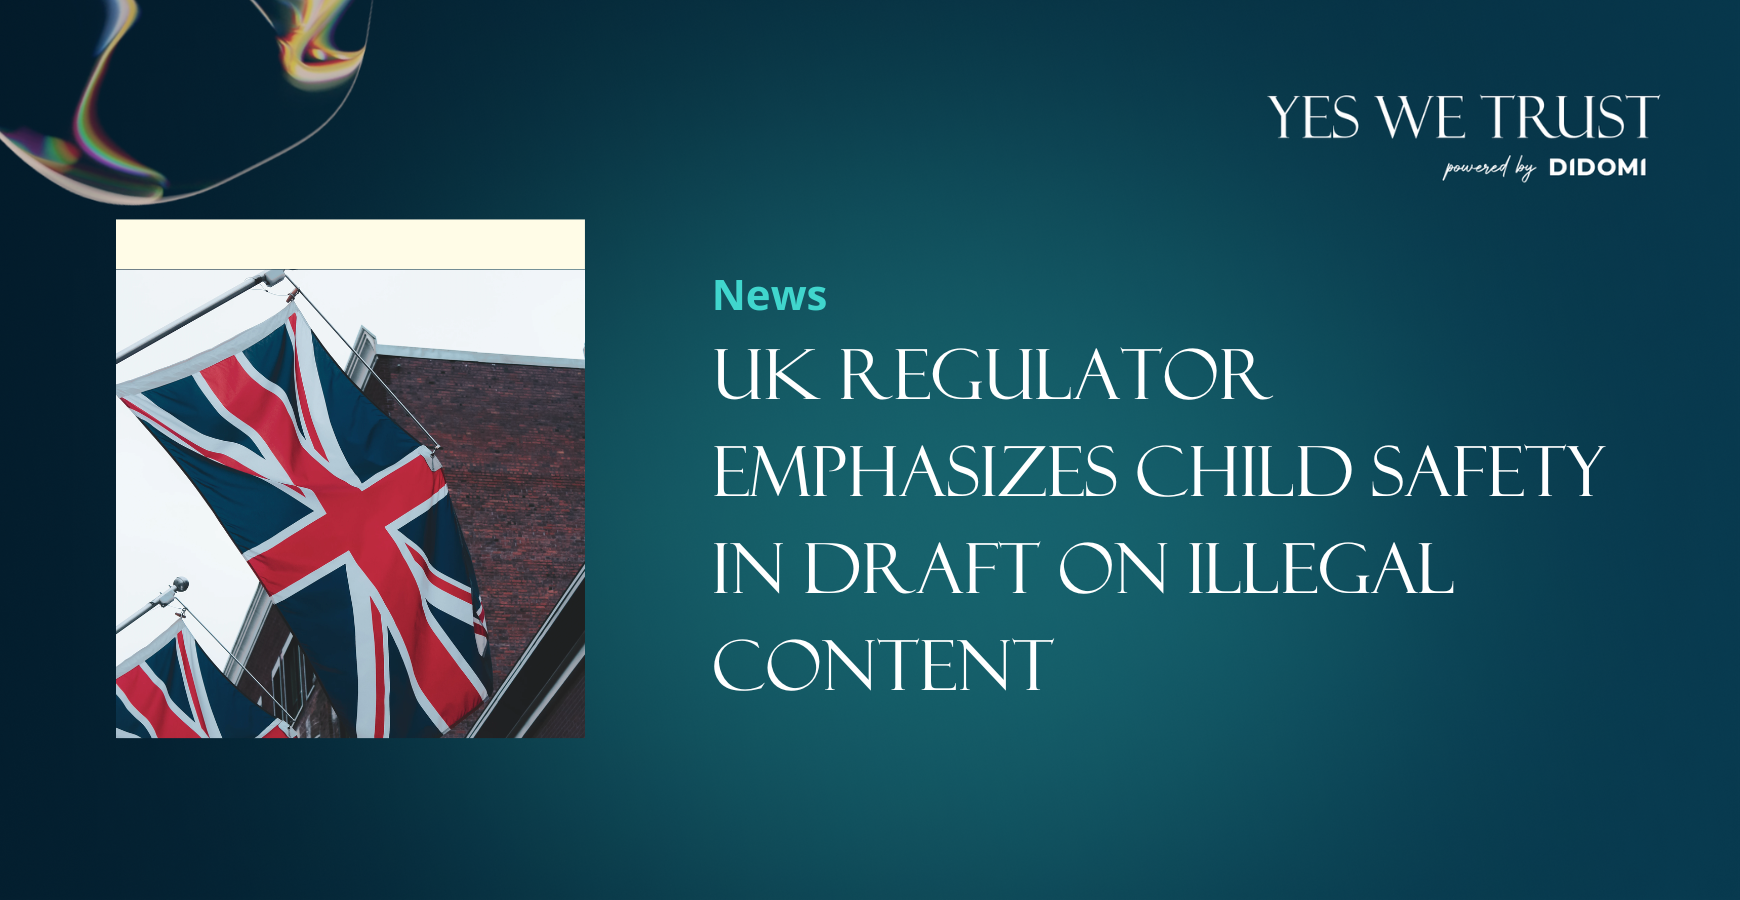 UK regulator emphasizes child safety in draft on illegal content